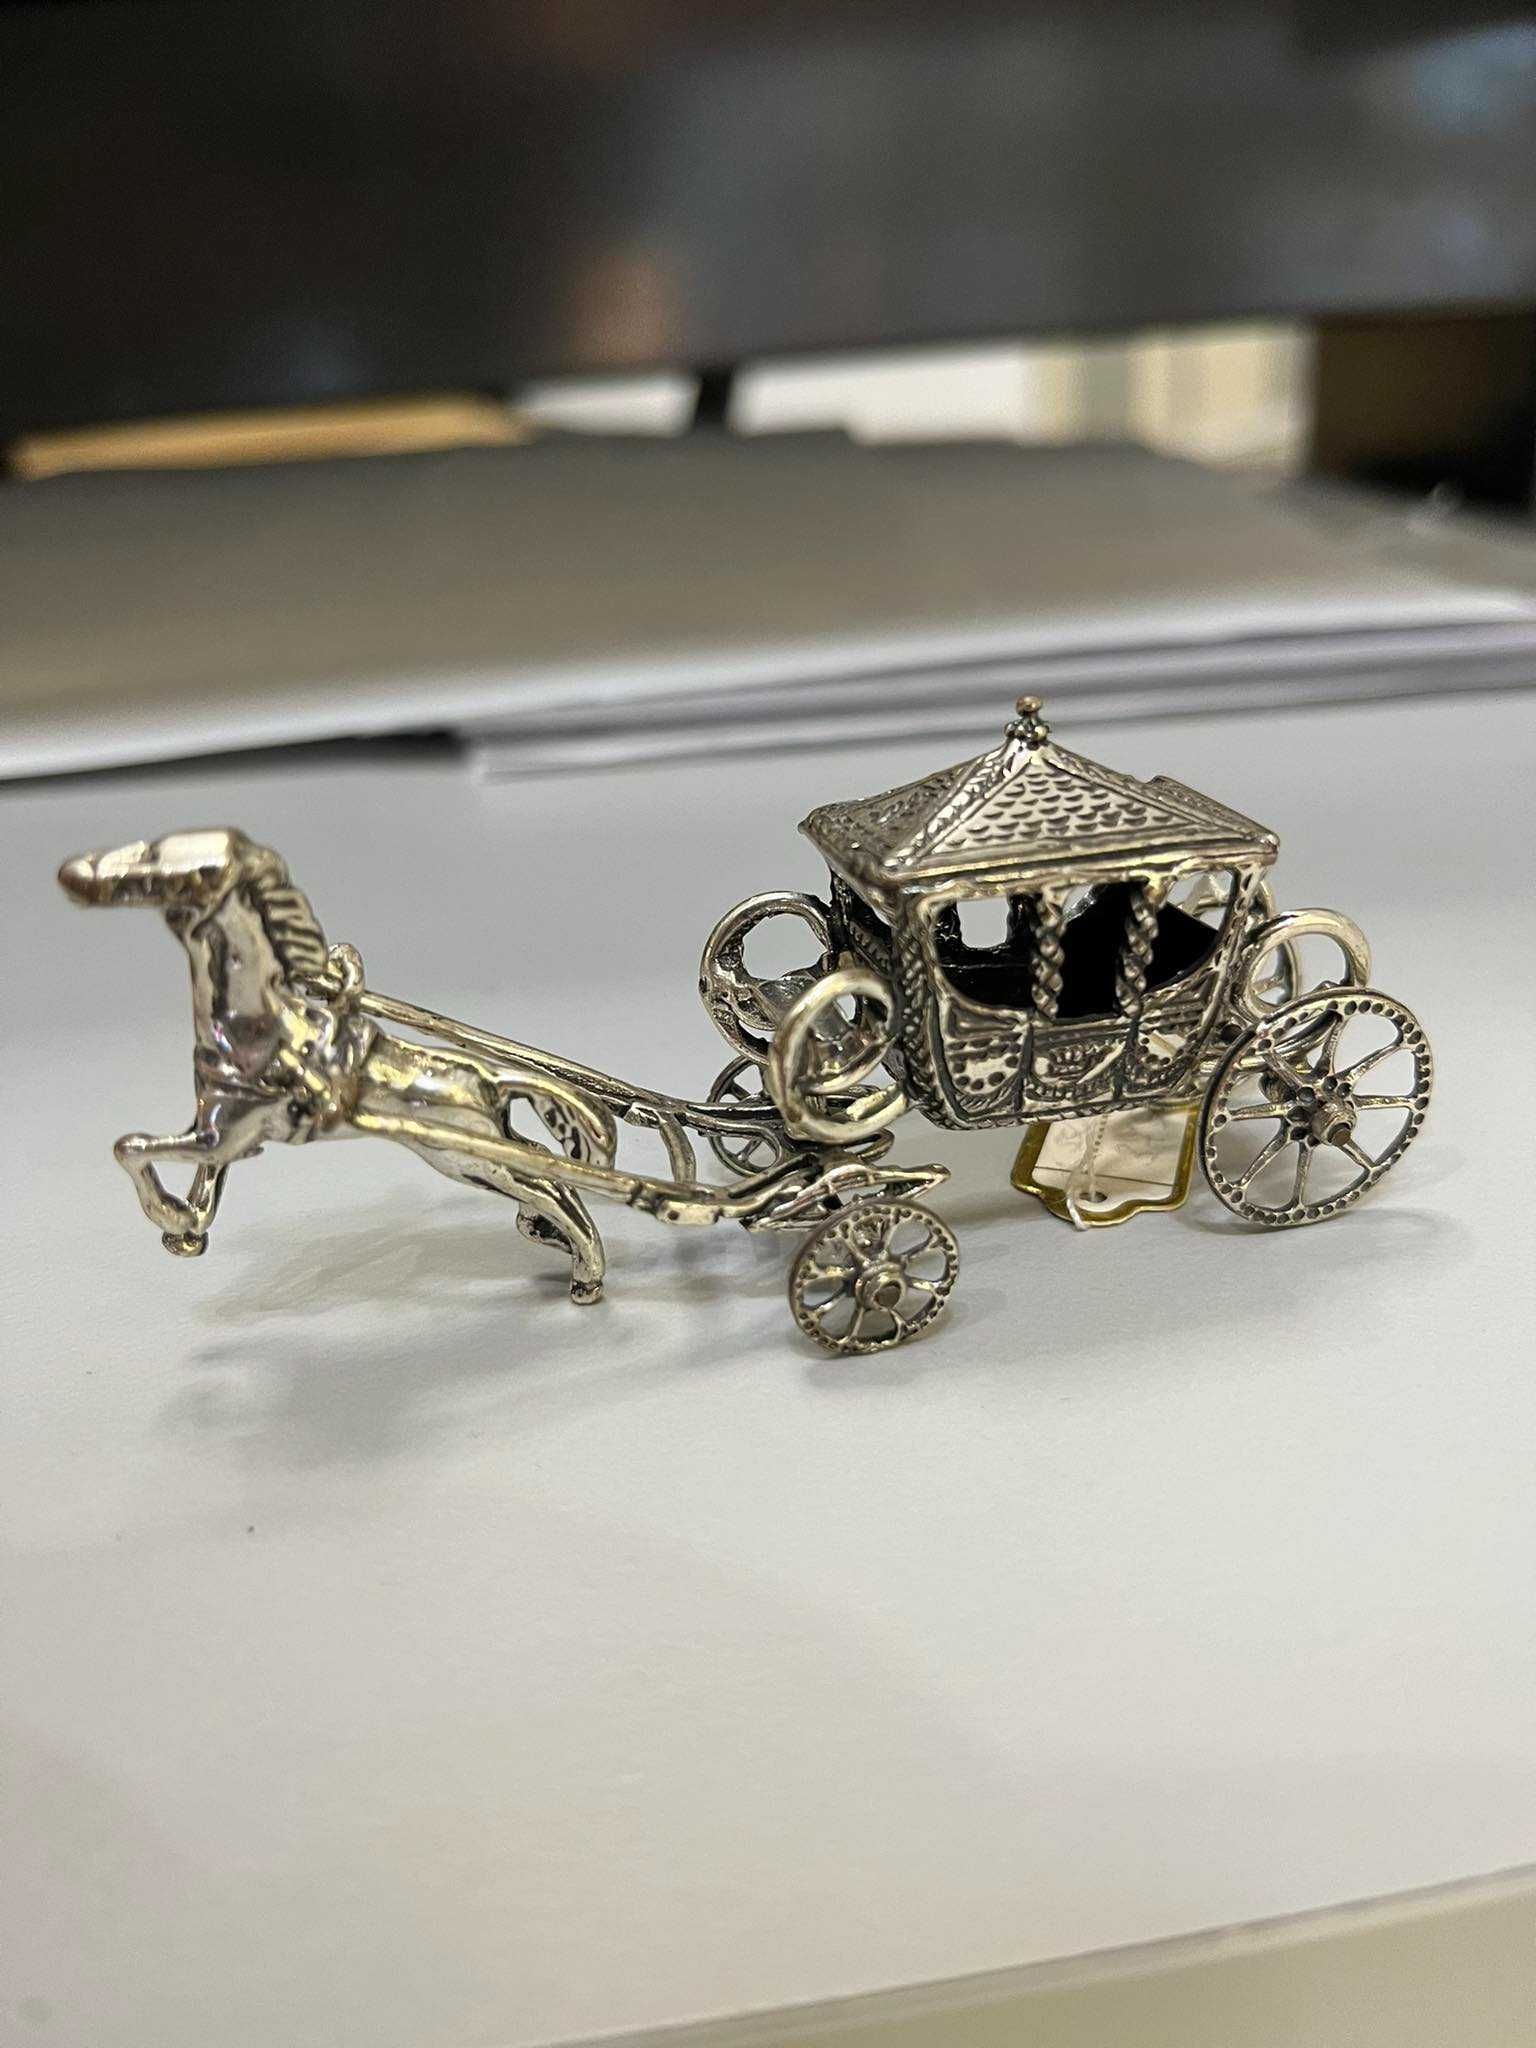 Уникална сребърна колесница